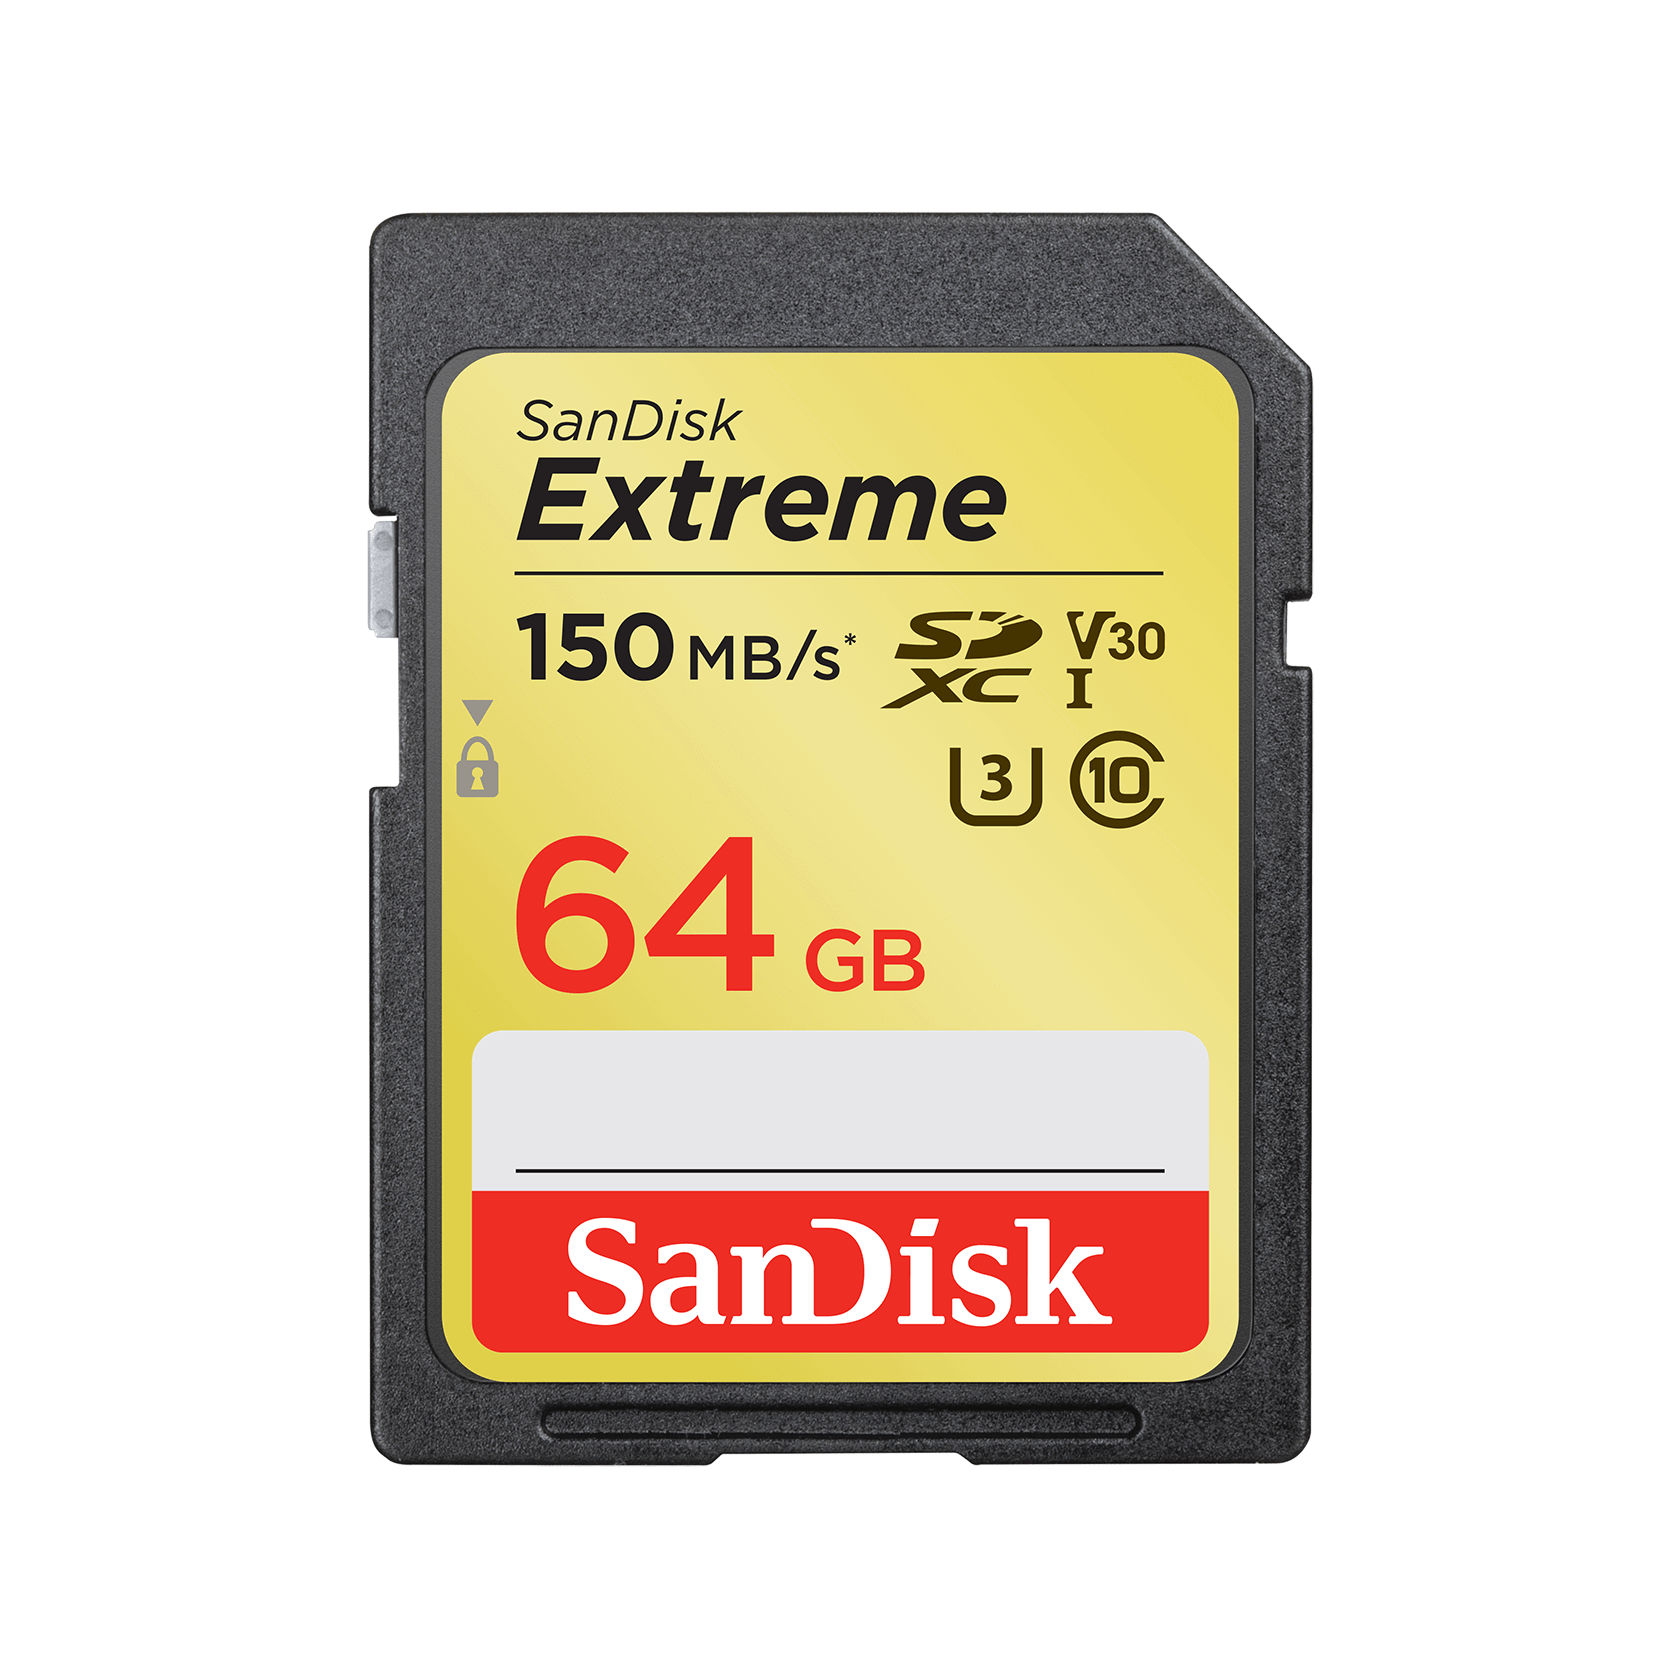 SanDisk Extreme SDHC 150MB/s UHS-I Memory Card - 64GB (C10, U3, V30) - SDSDXV6-064G-ANCIN